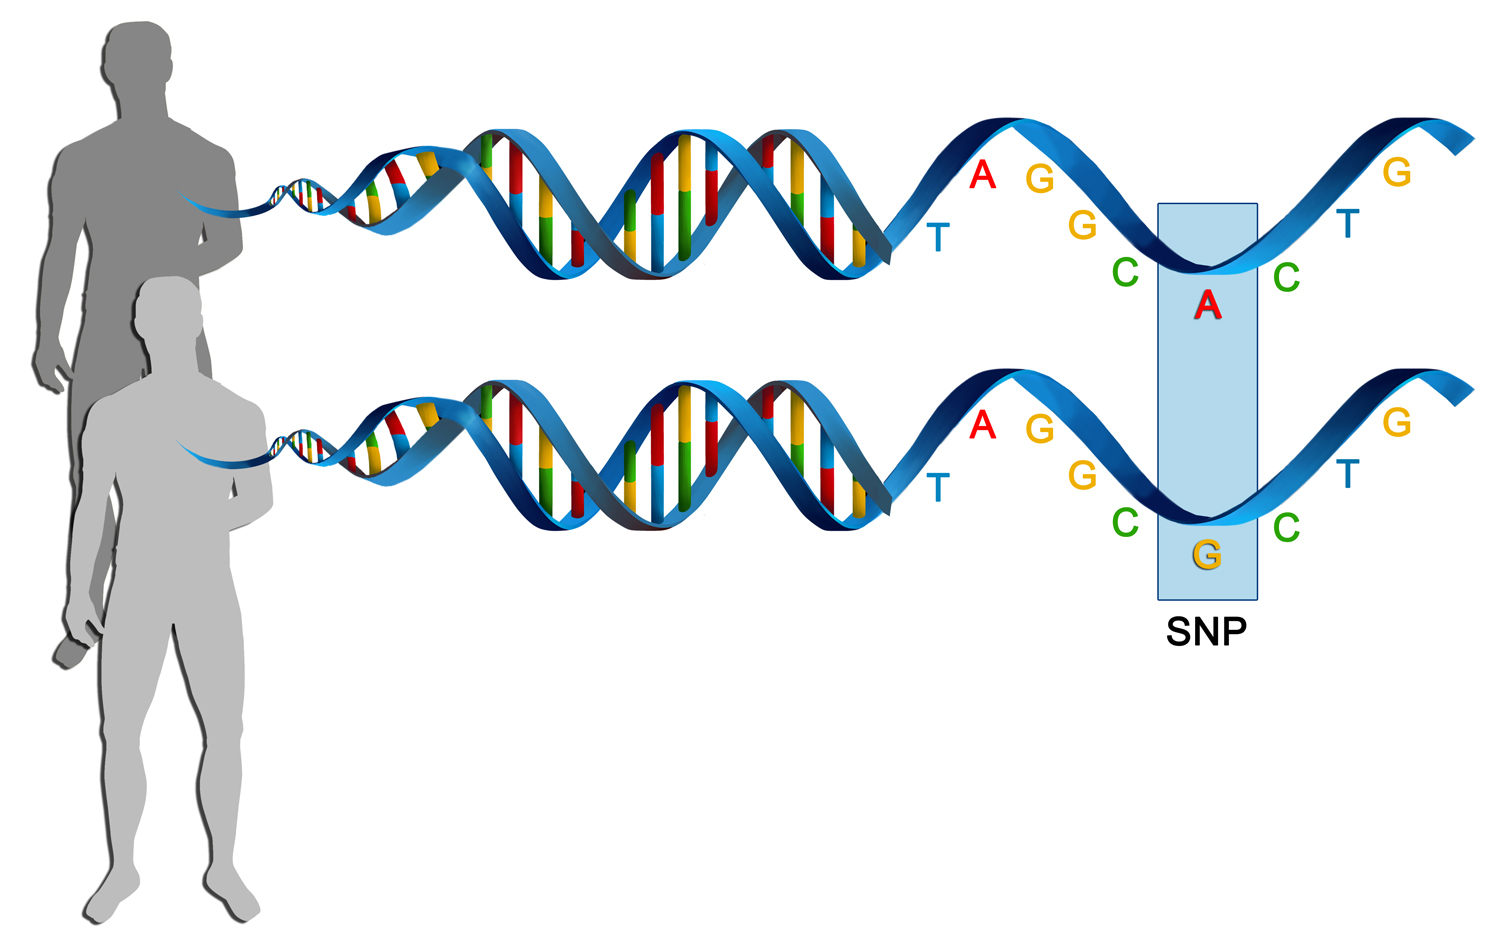 http://atlasofscience.org/single-nucleotide-polymorphisms-as-genomic-markers-for-high-throughput-pharmacogenomic-studies/